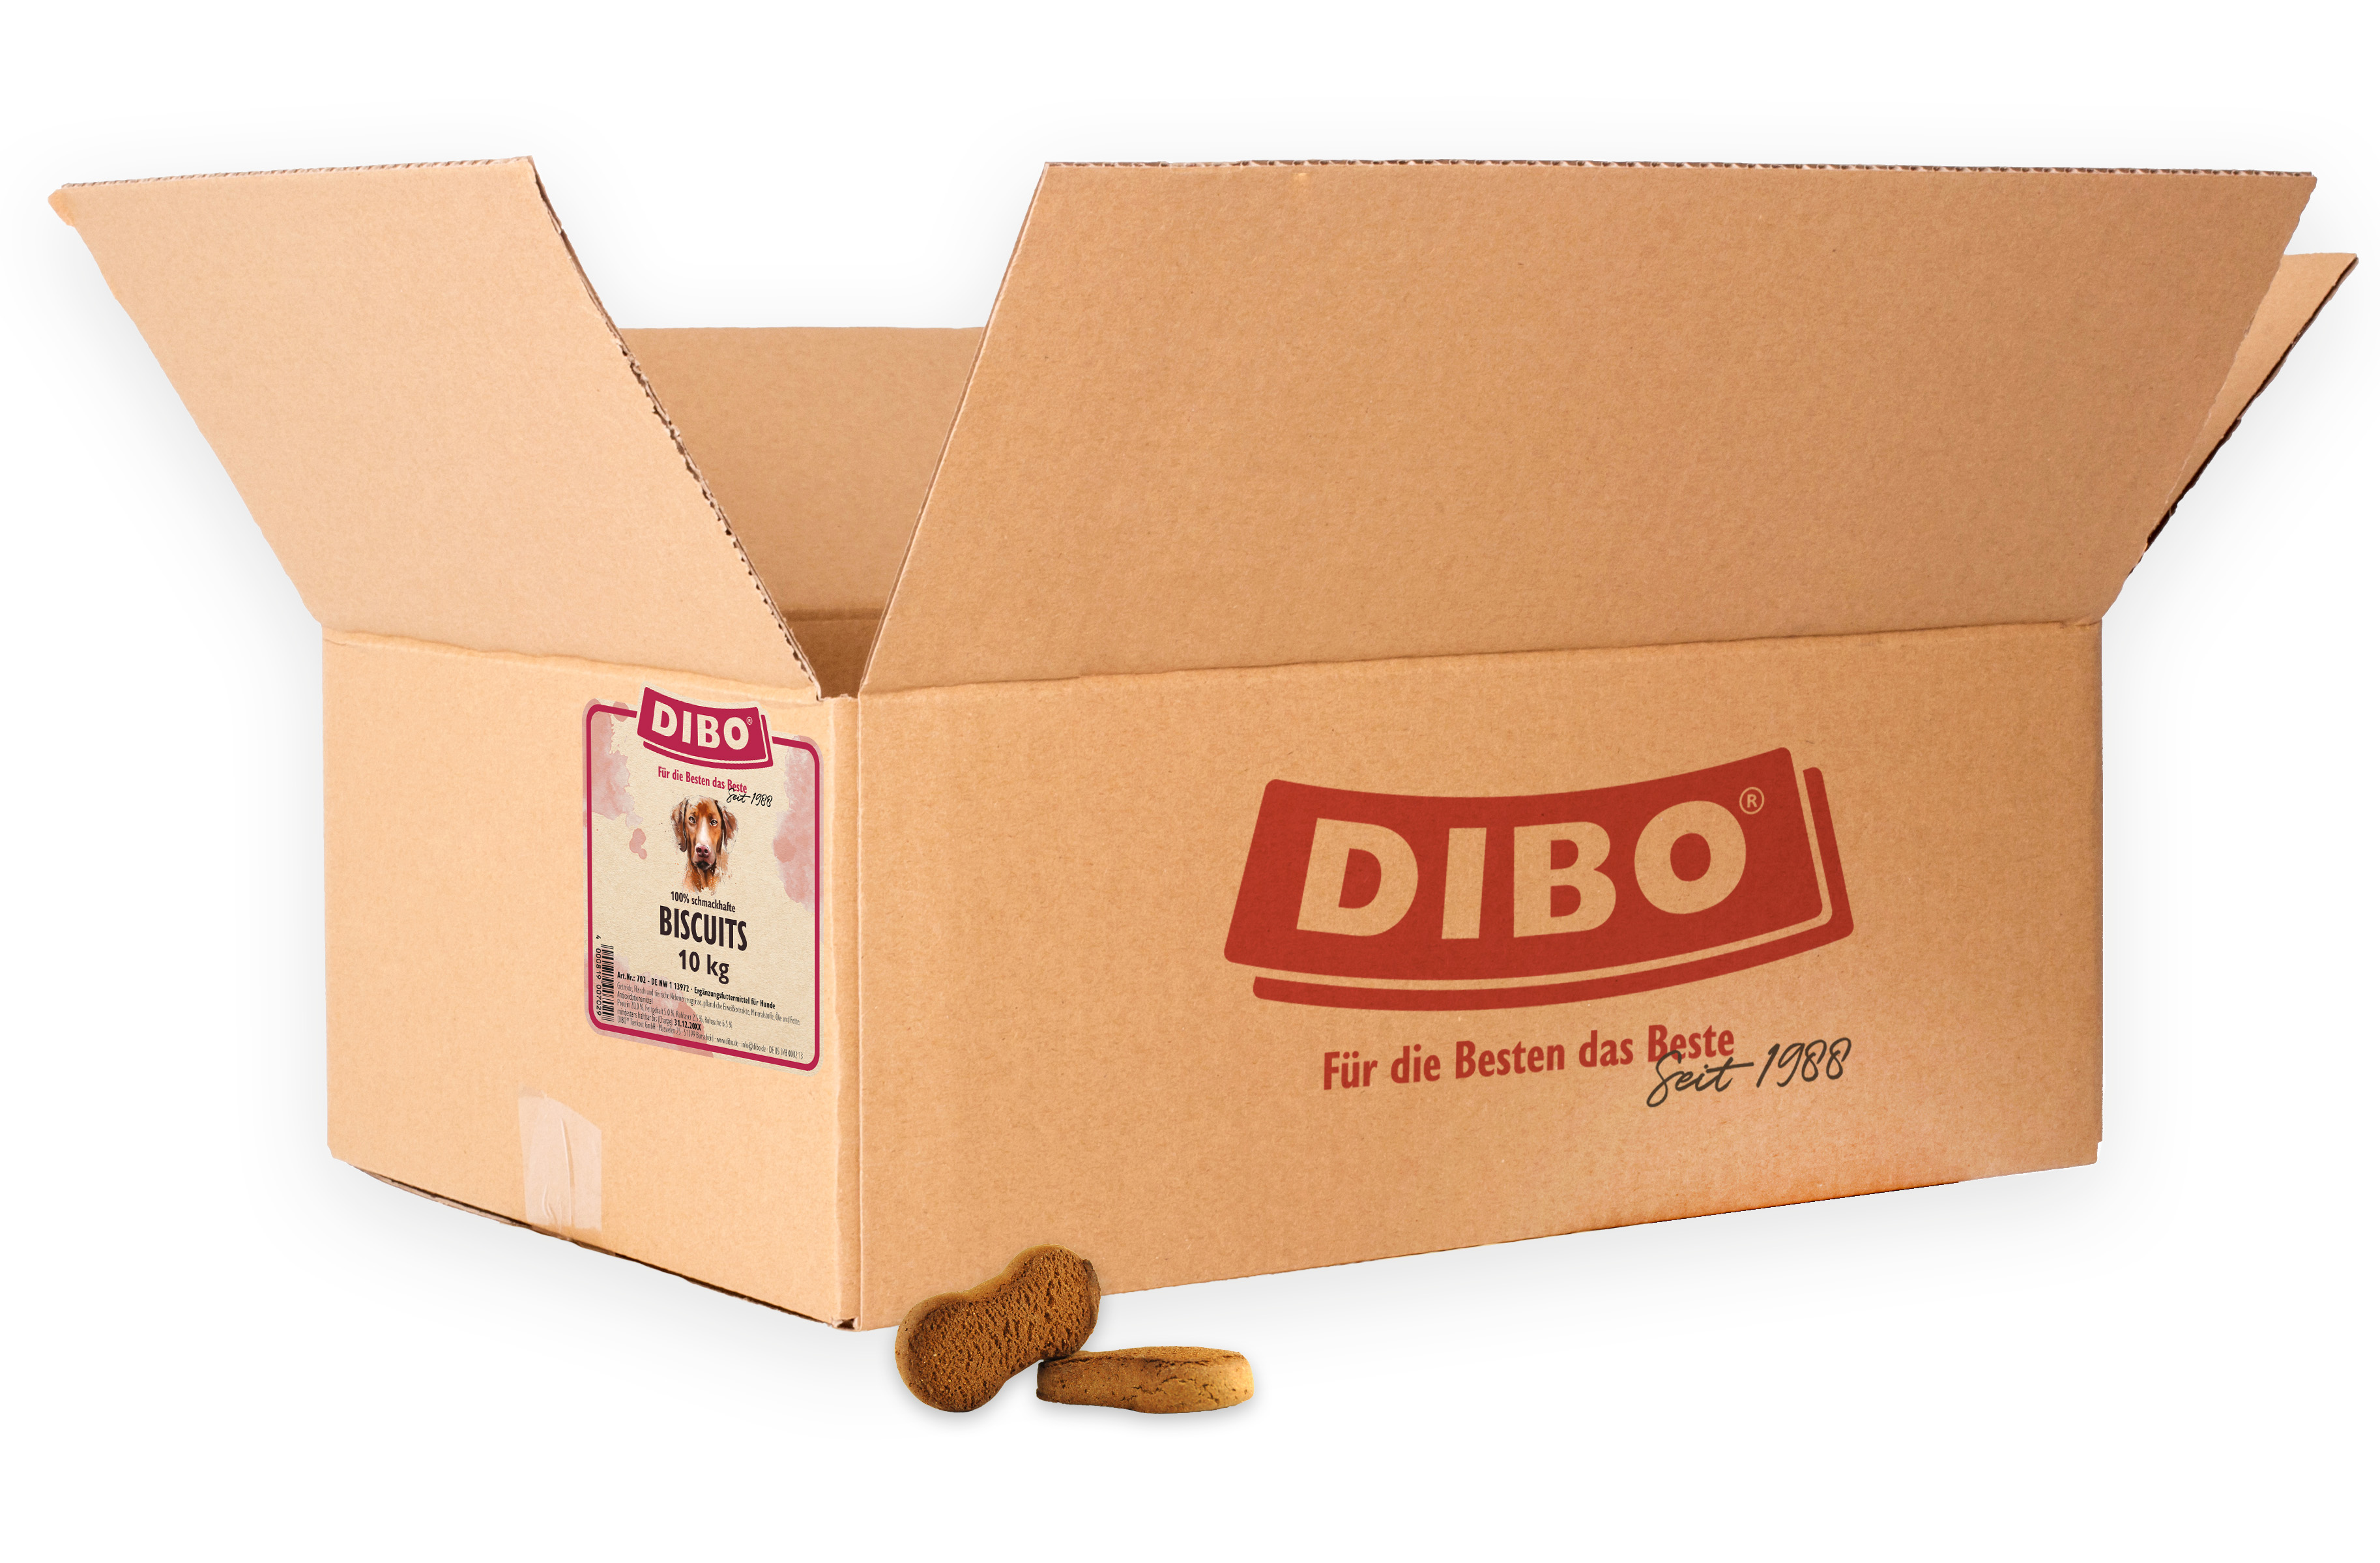 DIBO Biscuits, 10kg-Karton